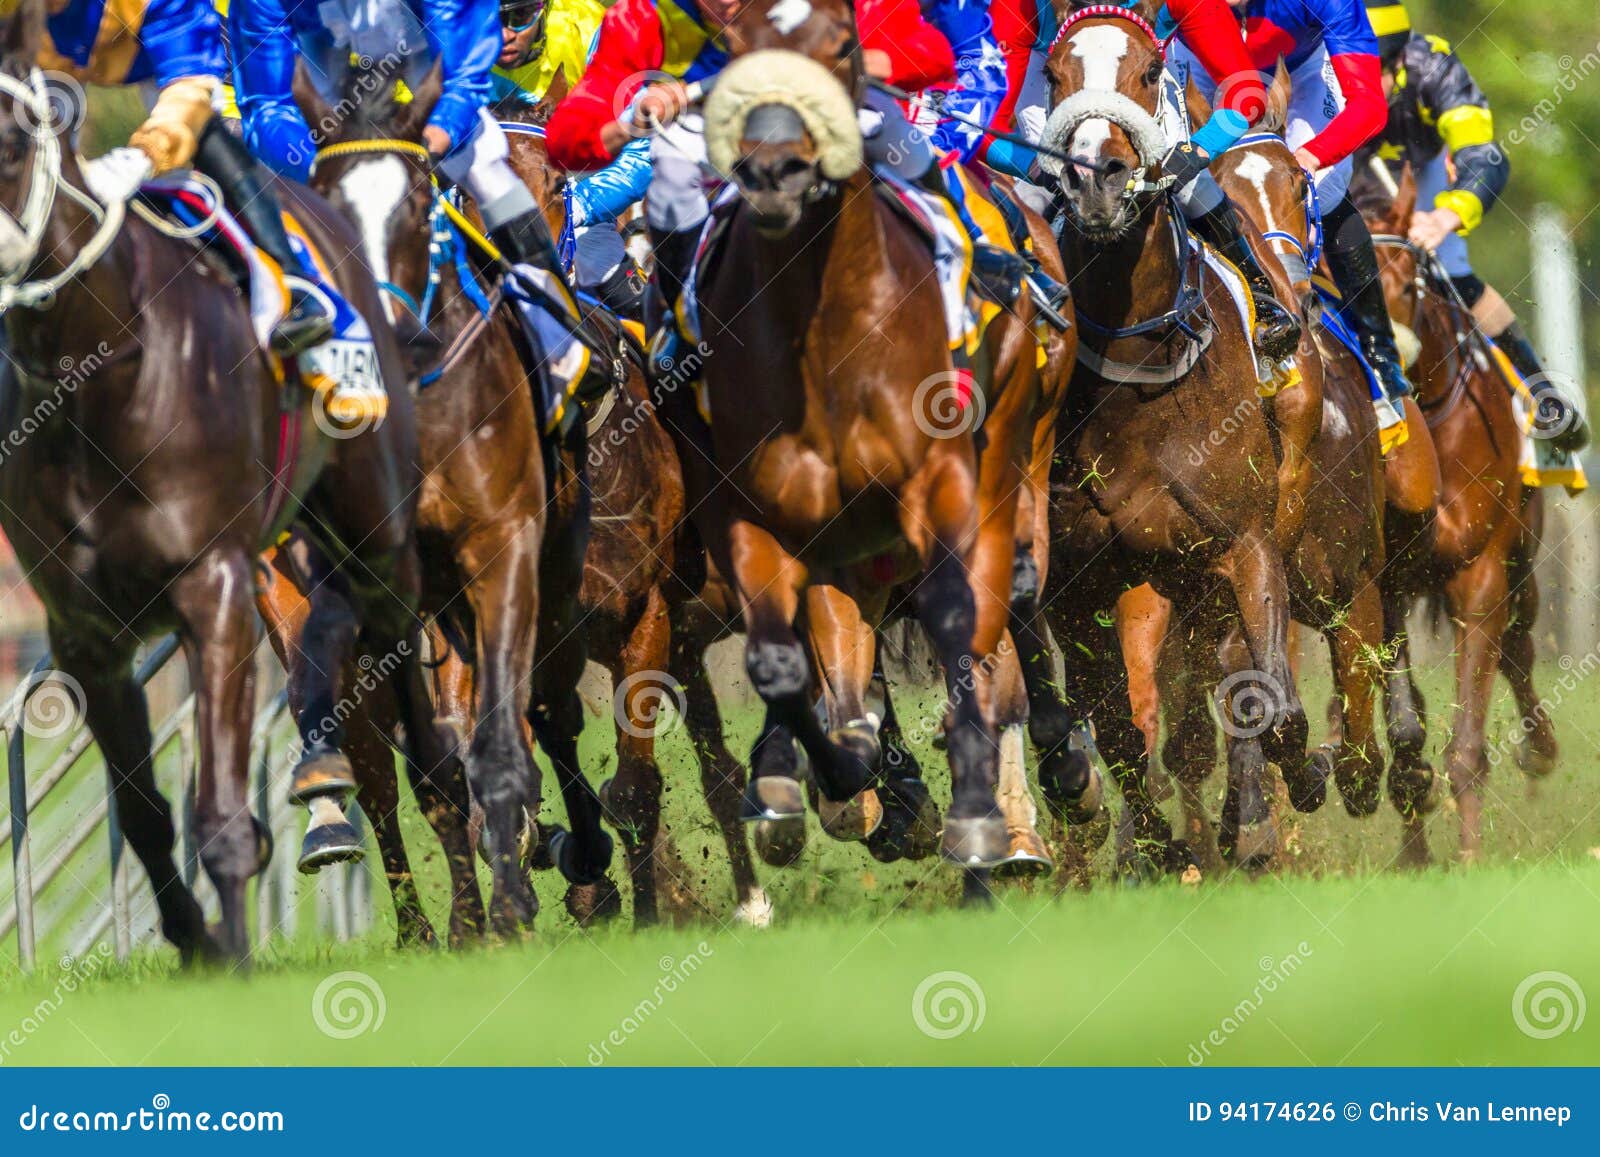 horse racing animals hoofs legs action